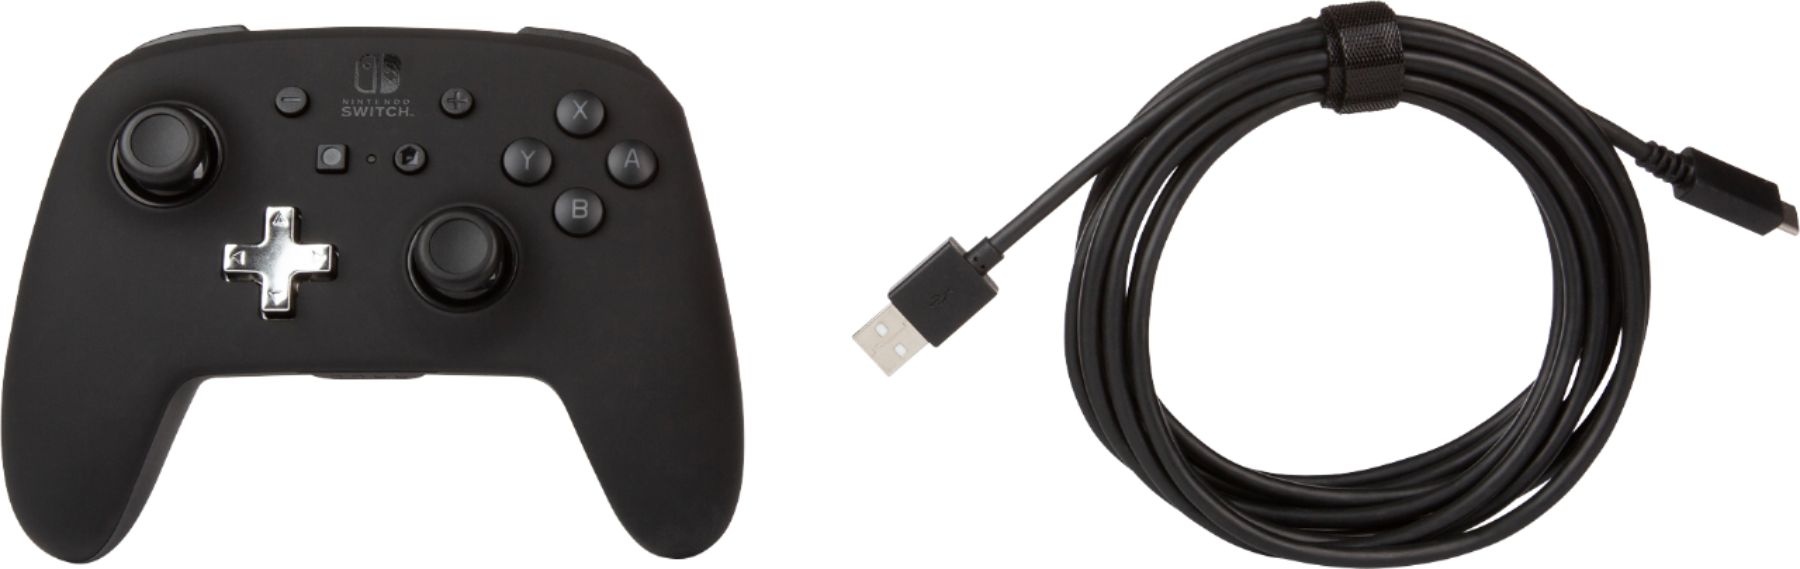 PowerA Wireless Controller for Nintendo Switch Sworn Protector NSGP0015-01  - Best Buy